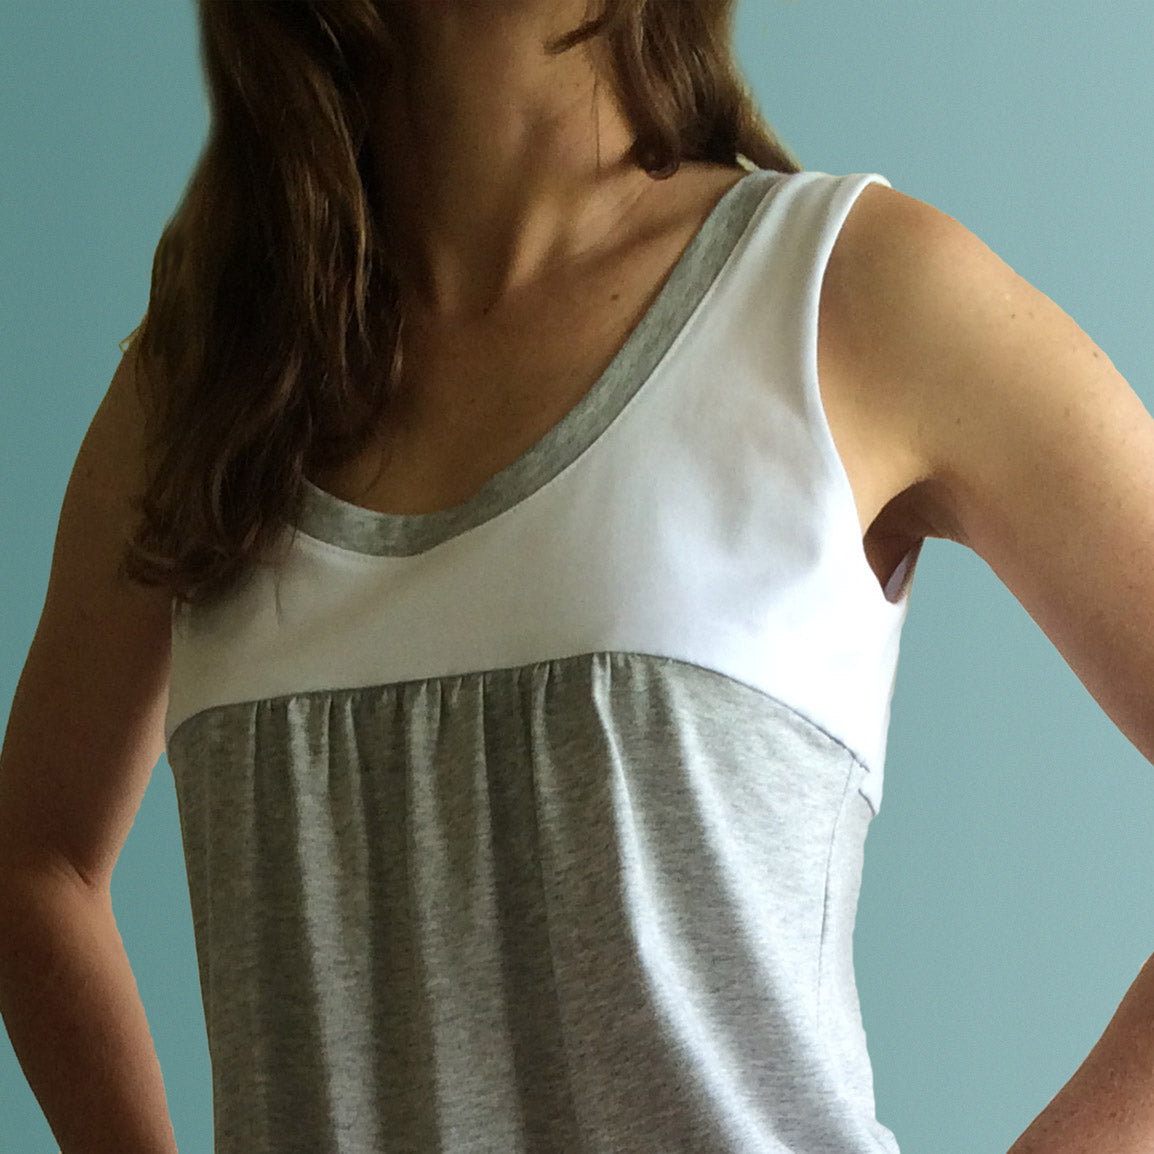 Womens organic clothing. Organic cotton nighties Australia. Summer sleeveless cotton nightie in soft white and grey organic cotton jersey.